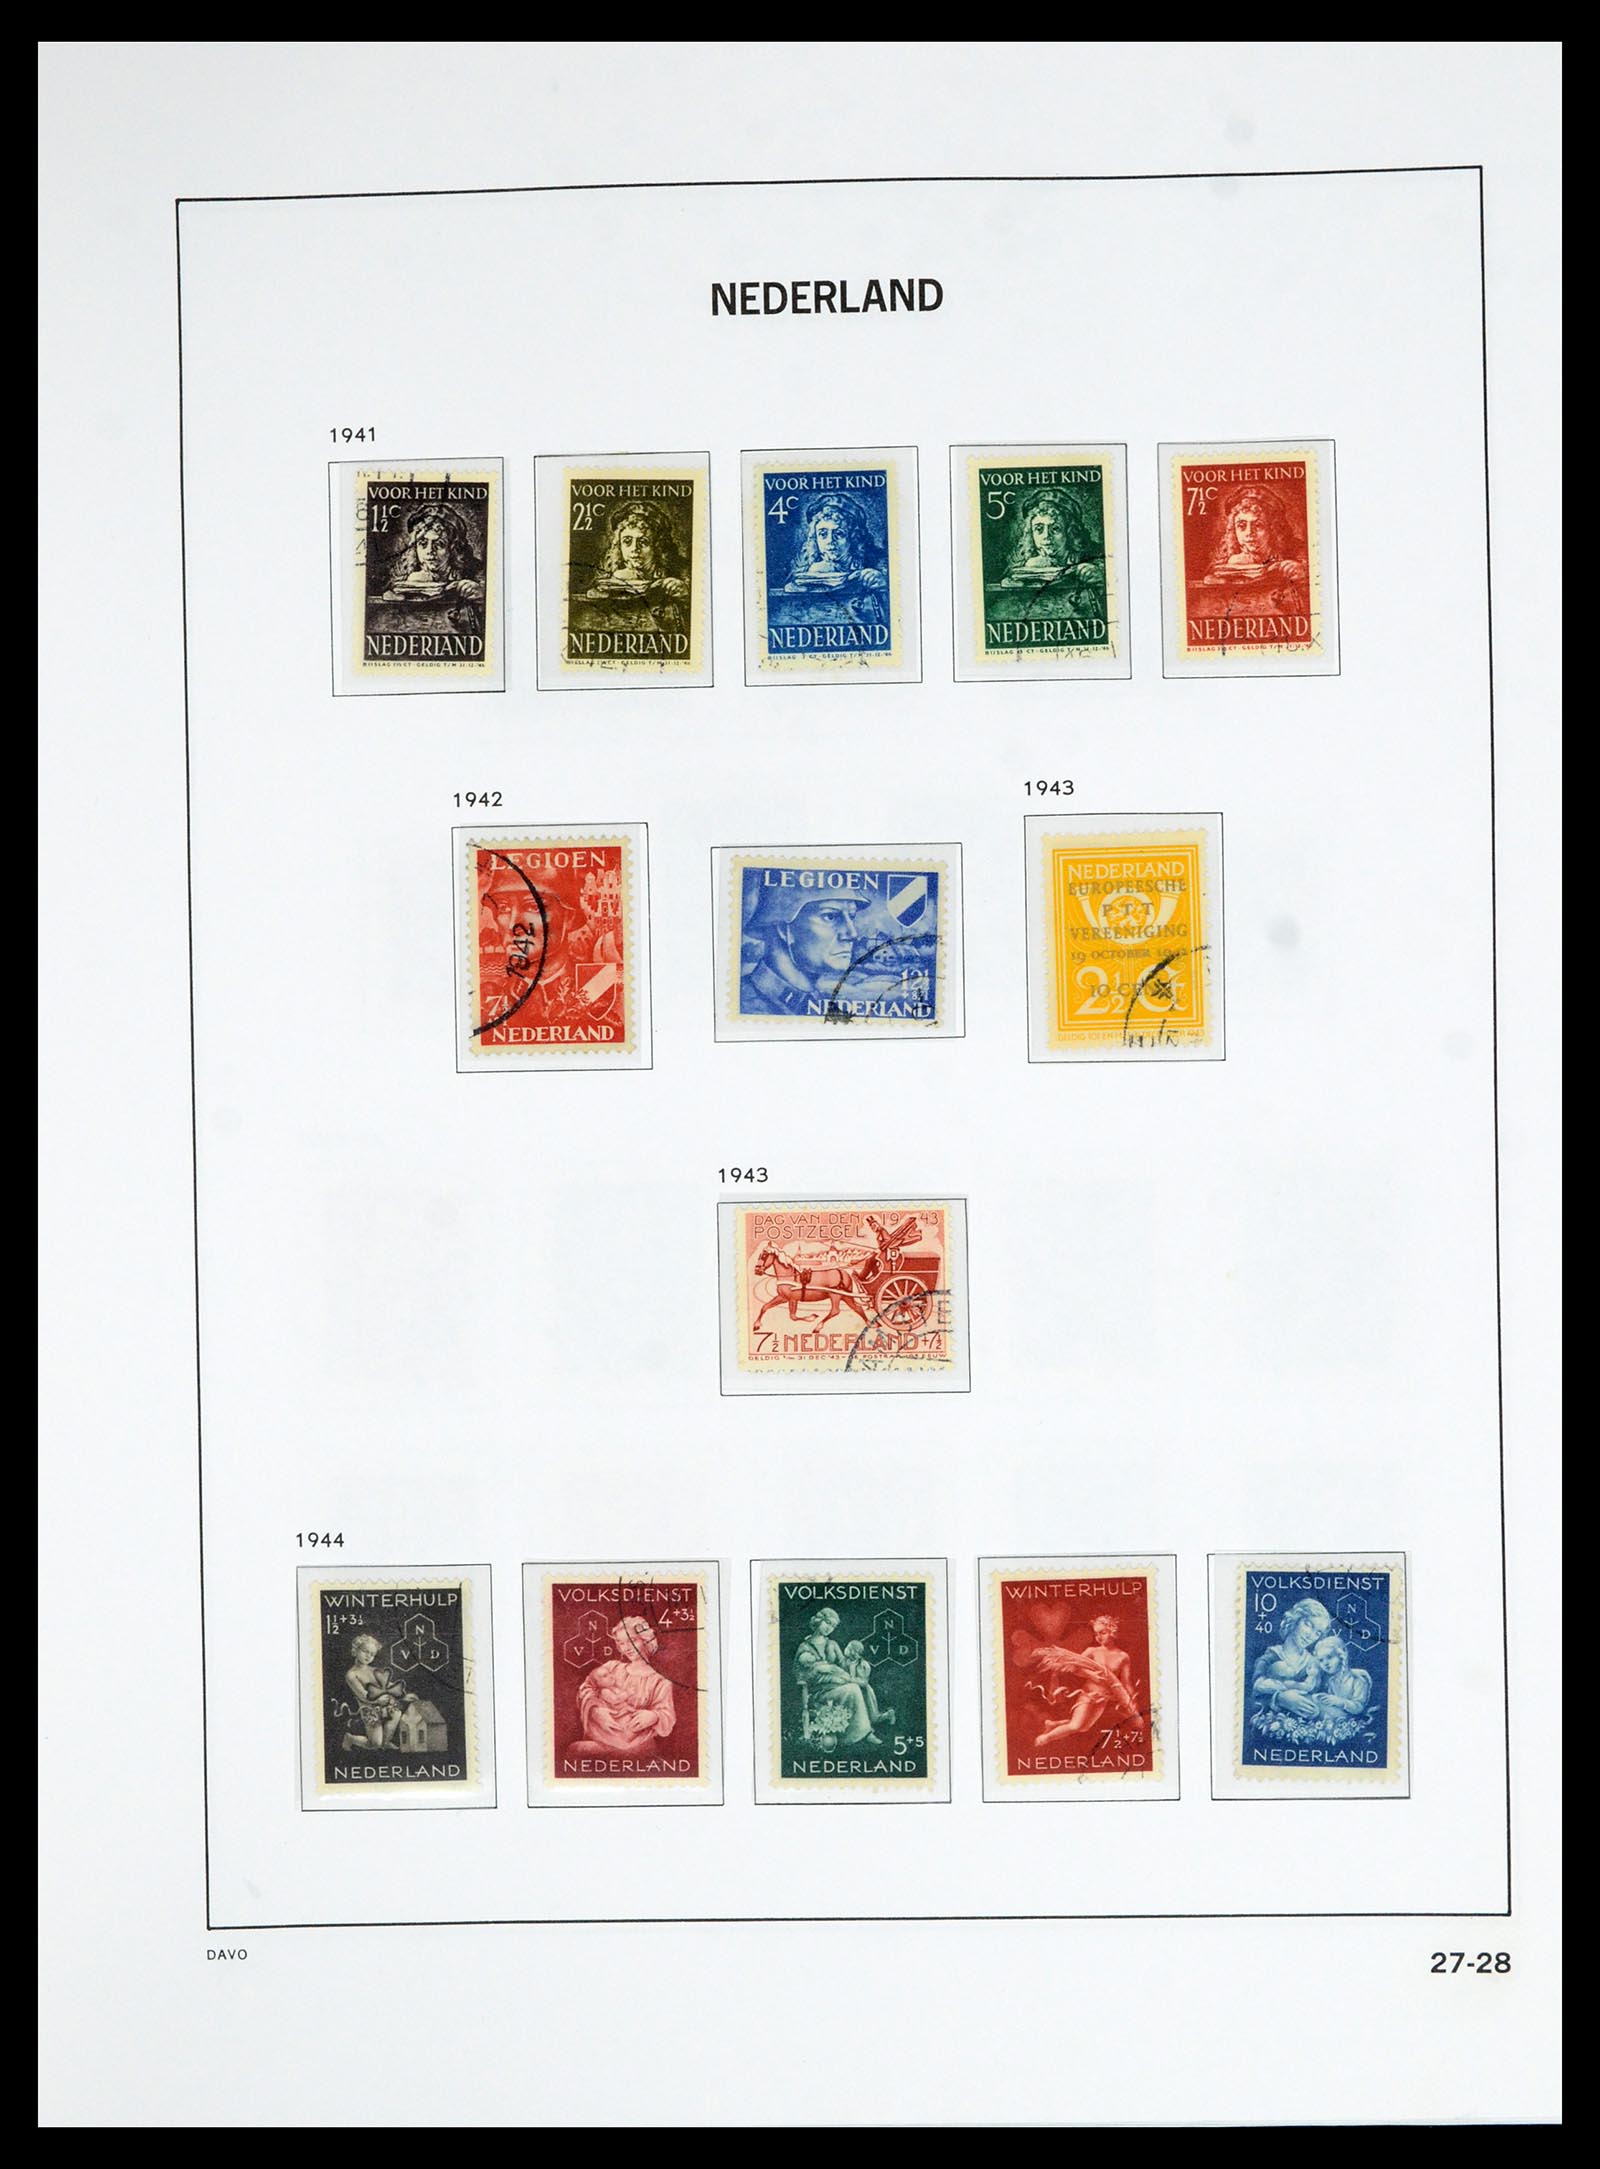 36629 027 - Stamp collection 36629 Nederland 1852-1989.